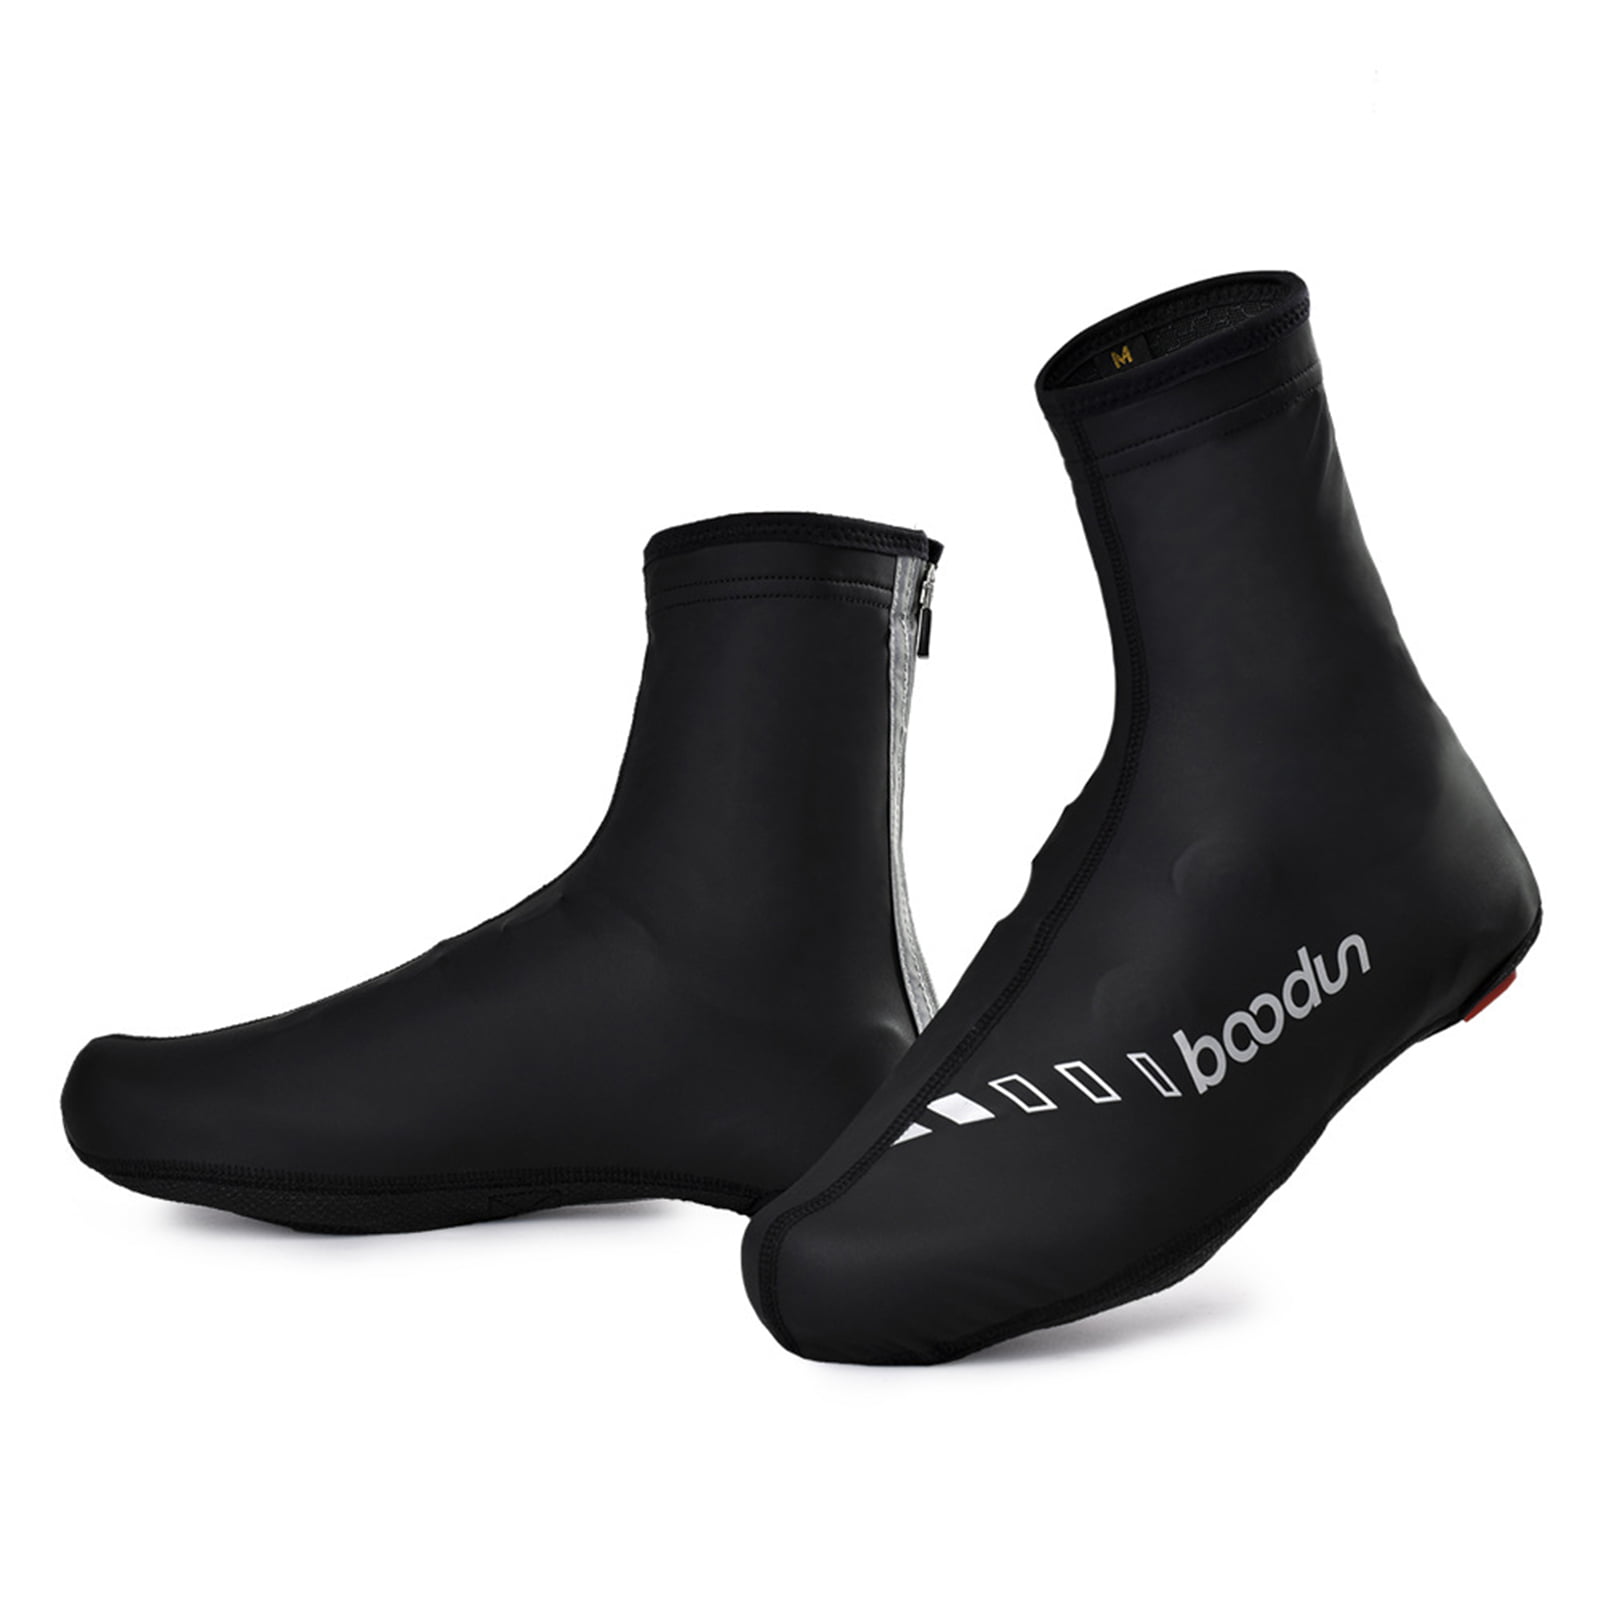 Waterproof Cycling Shoe Covers Protecter Bike Cycling Overshoes 11.8" Reflective 